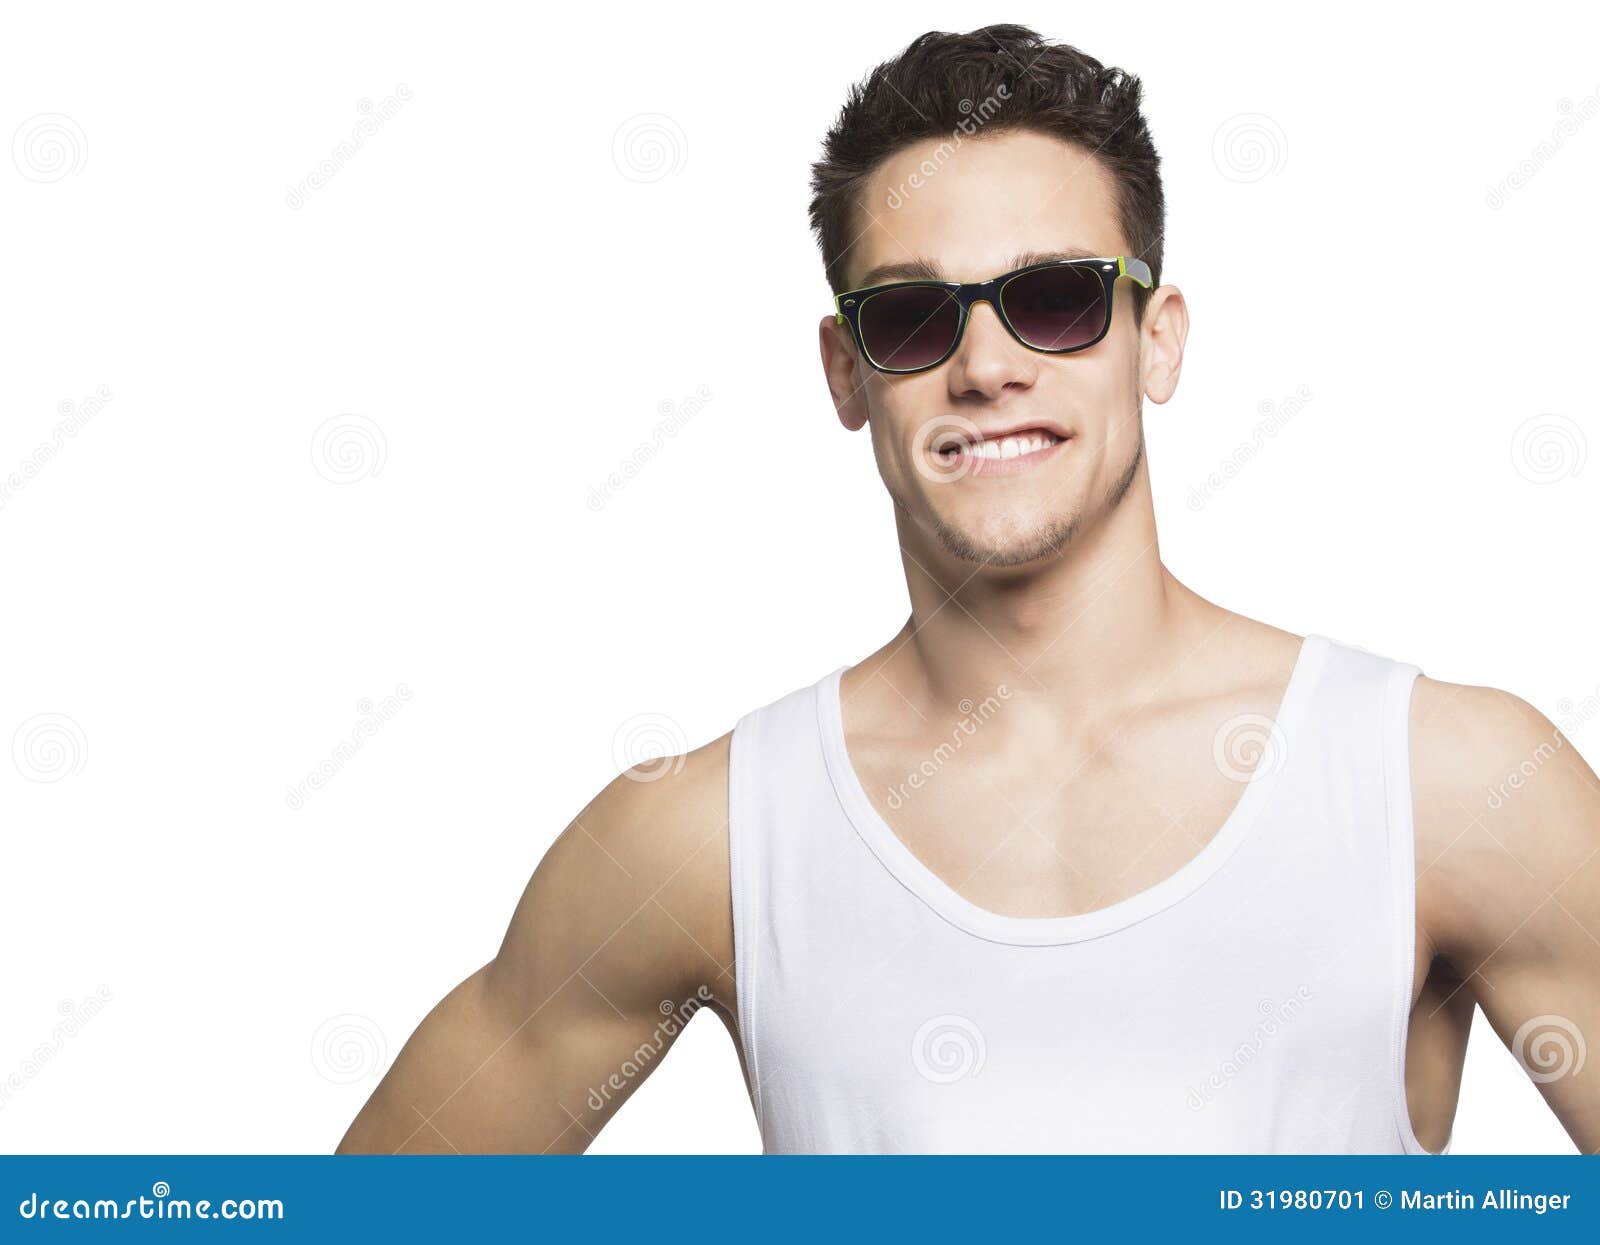 young man wearing goggle in tanktop